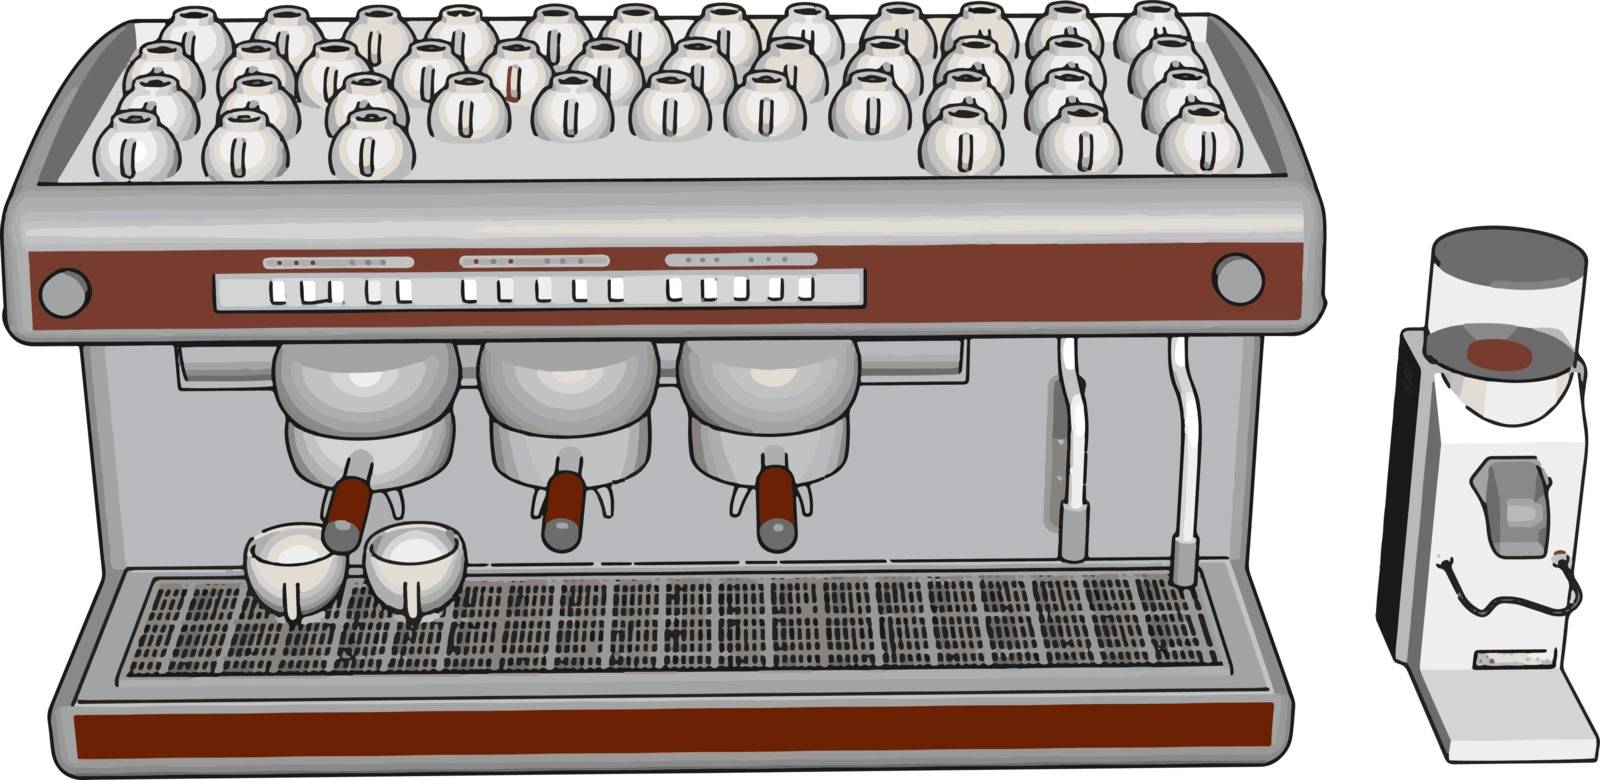 3D vector illustration of an espresso maker white background by Morphart